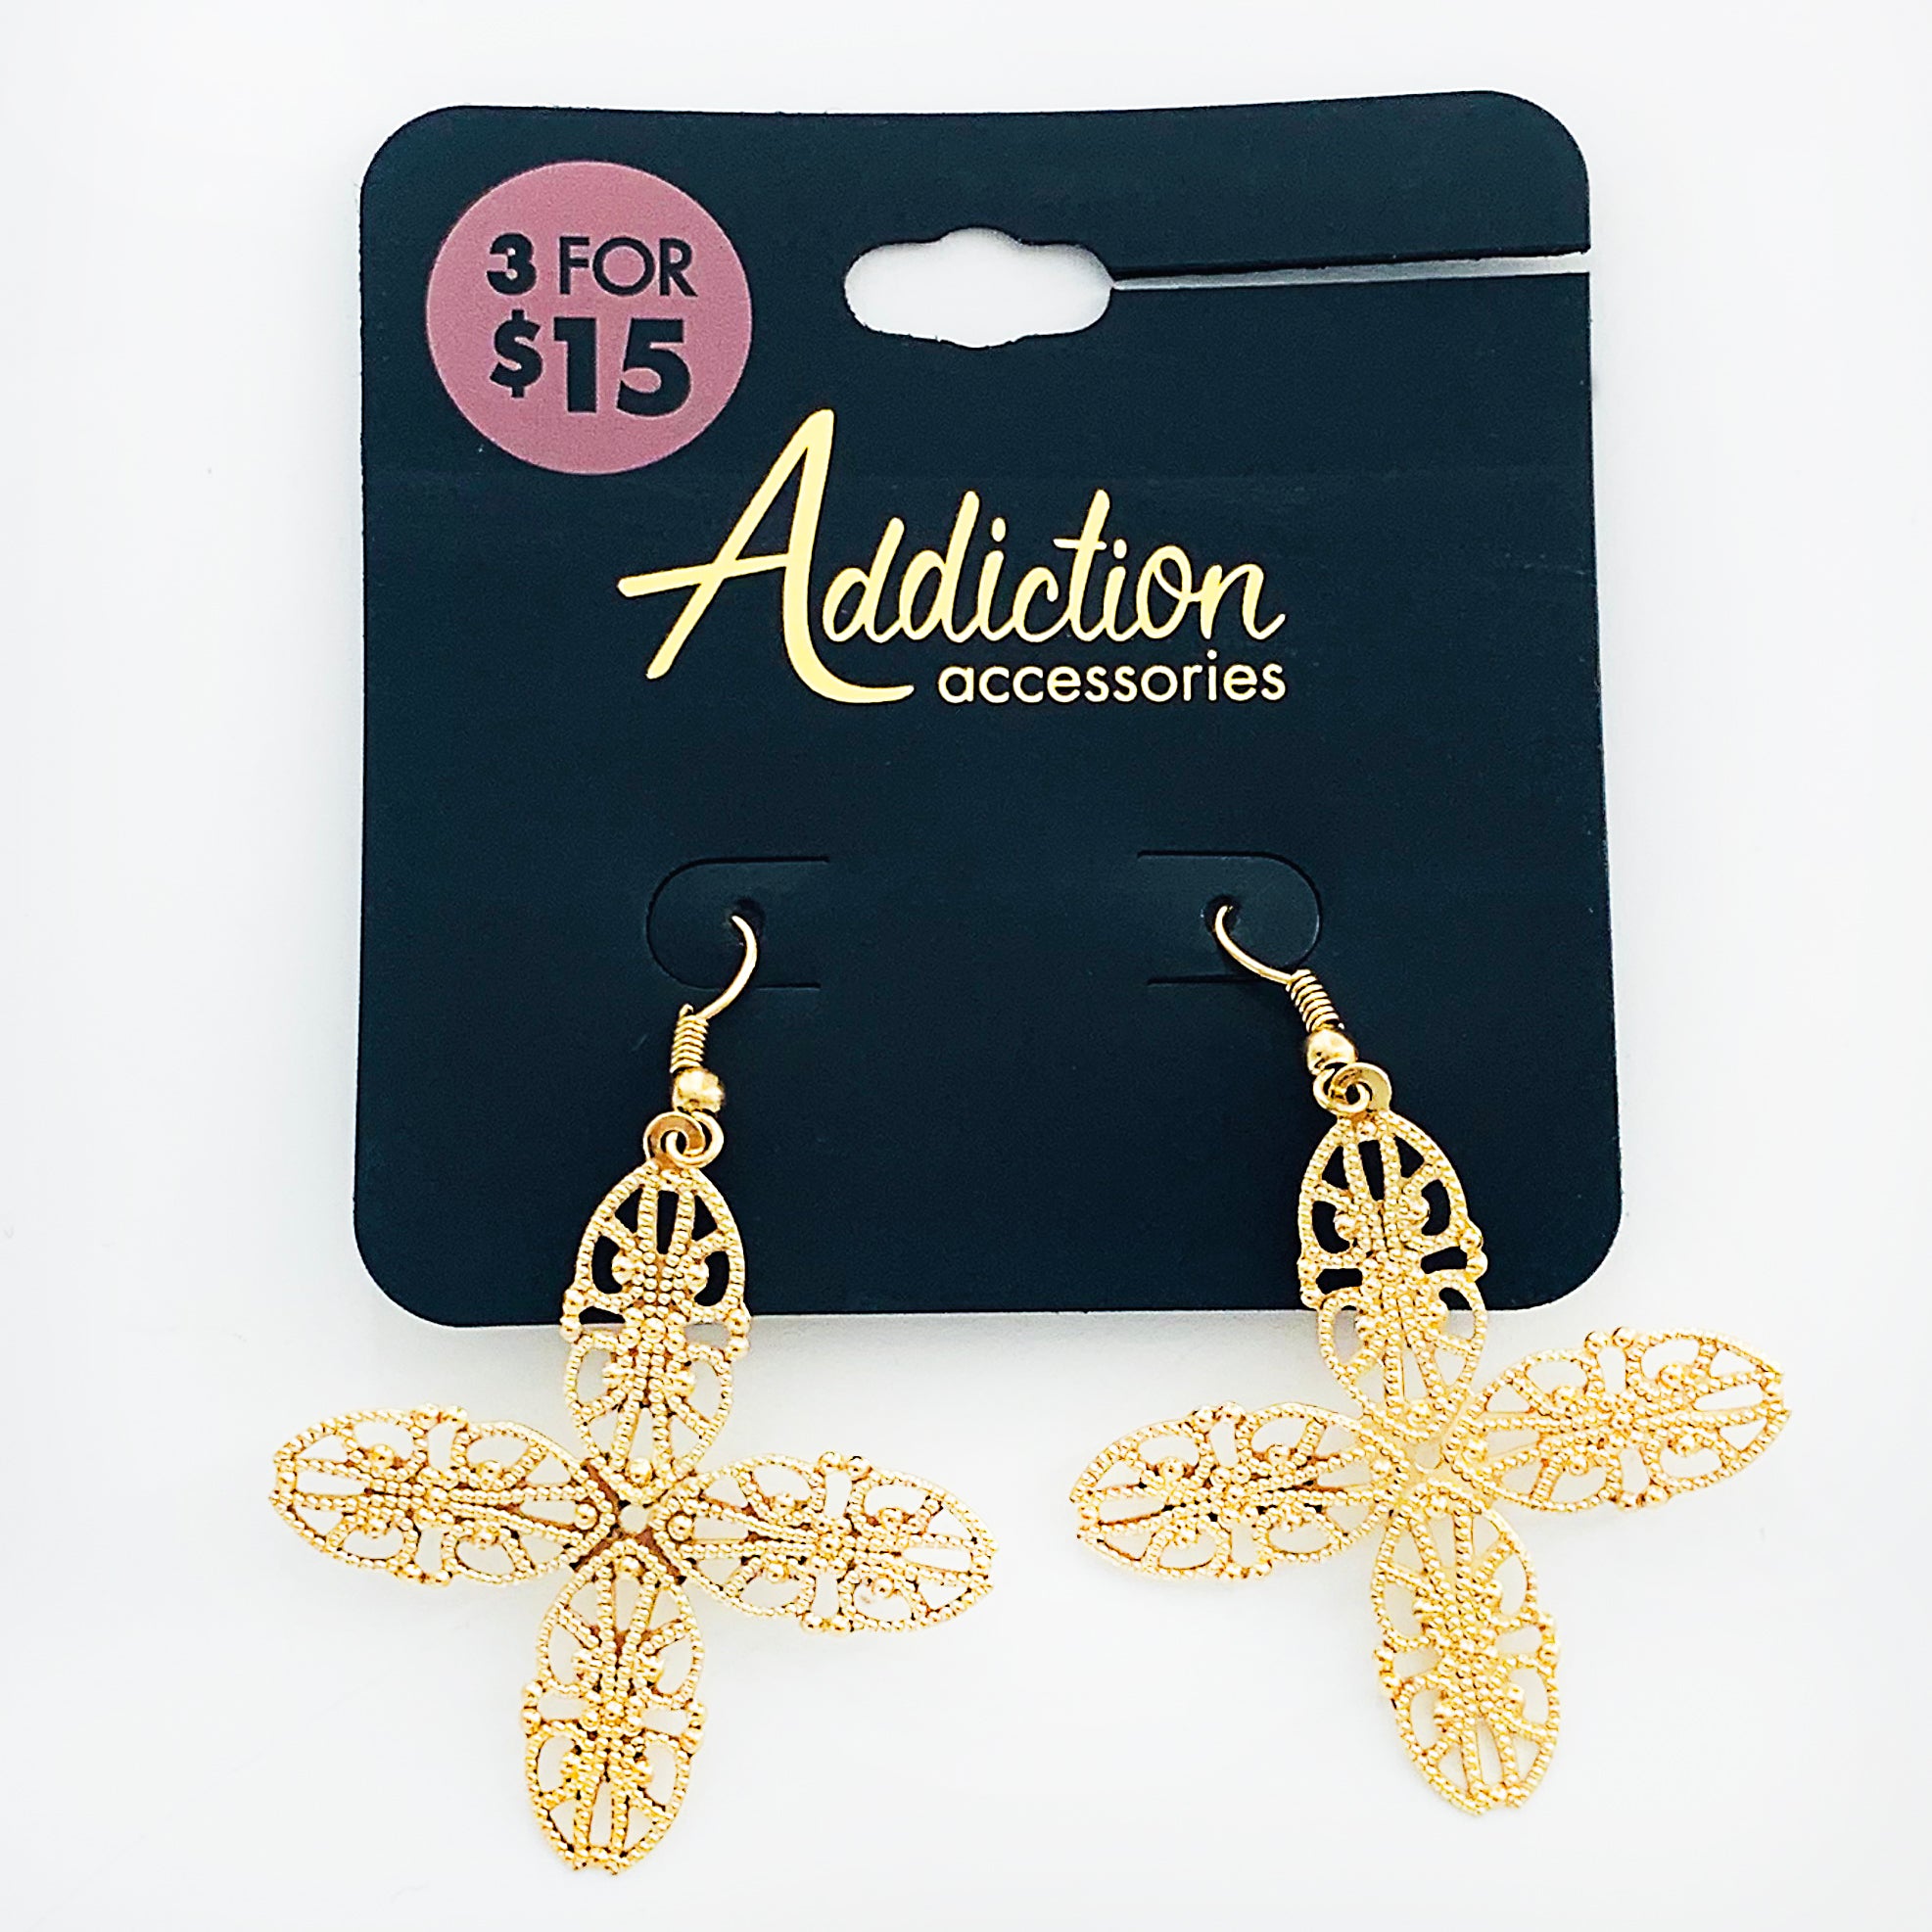 Ornate gold cross dangling earrings